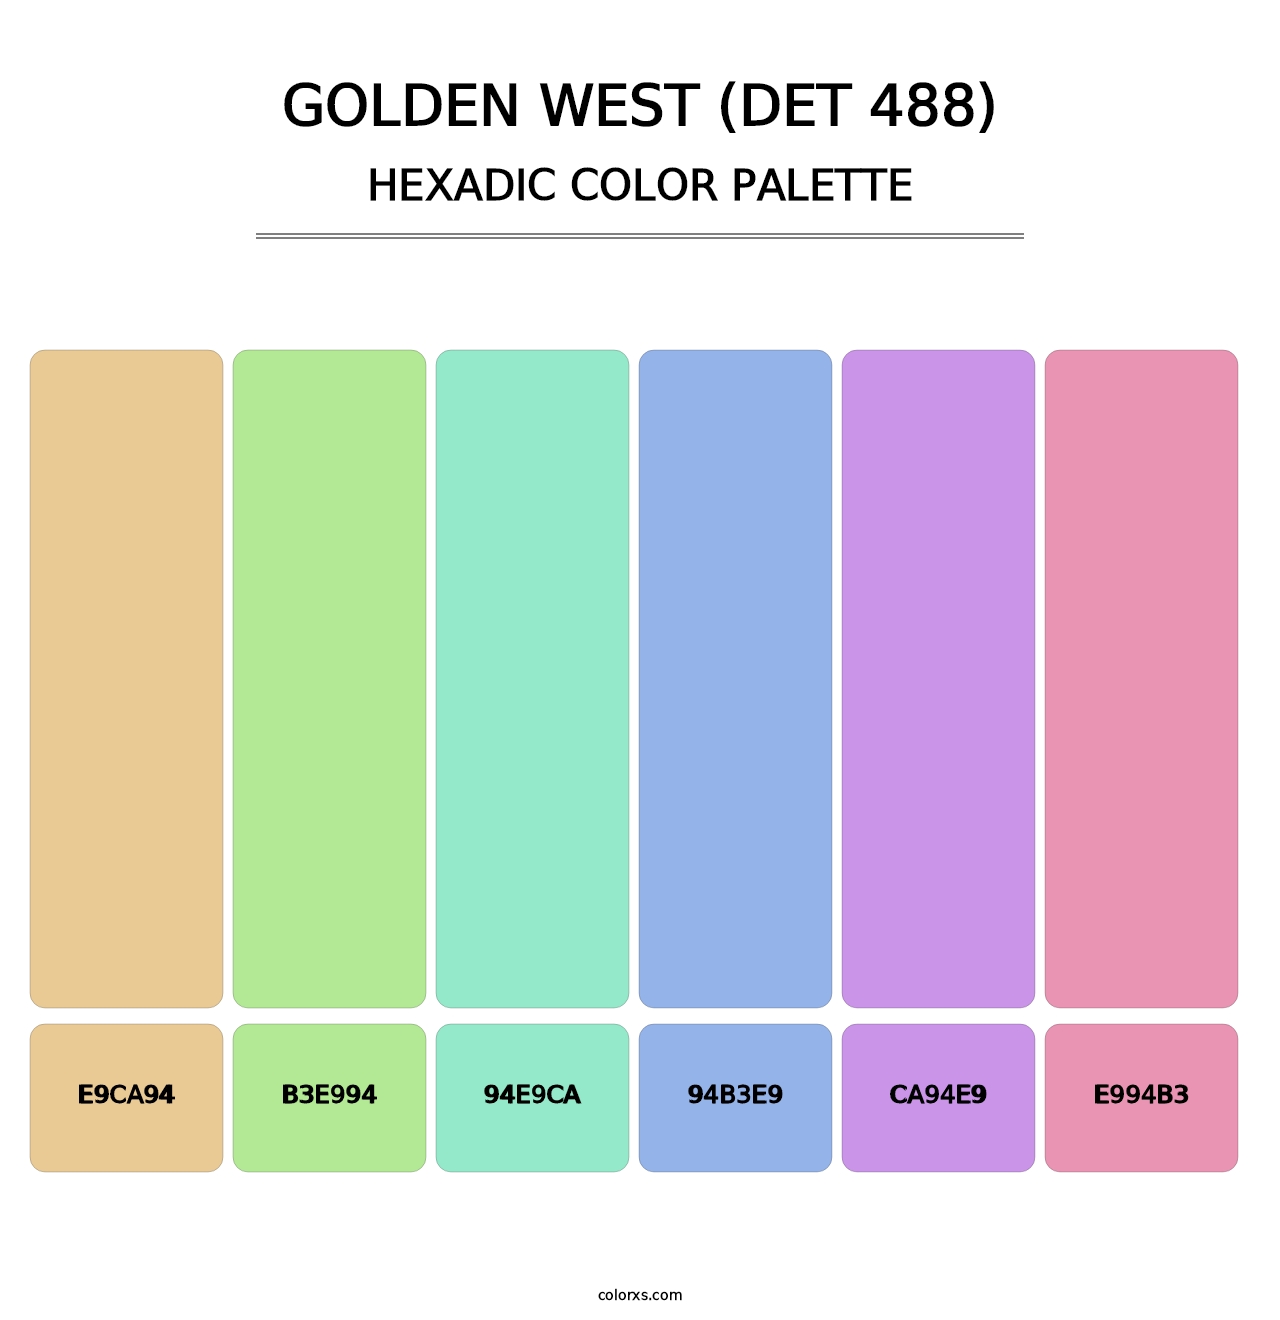 Golden West (DET 488) - Hexadic Color Palette